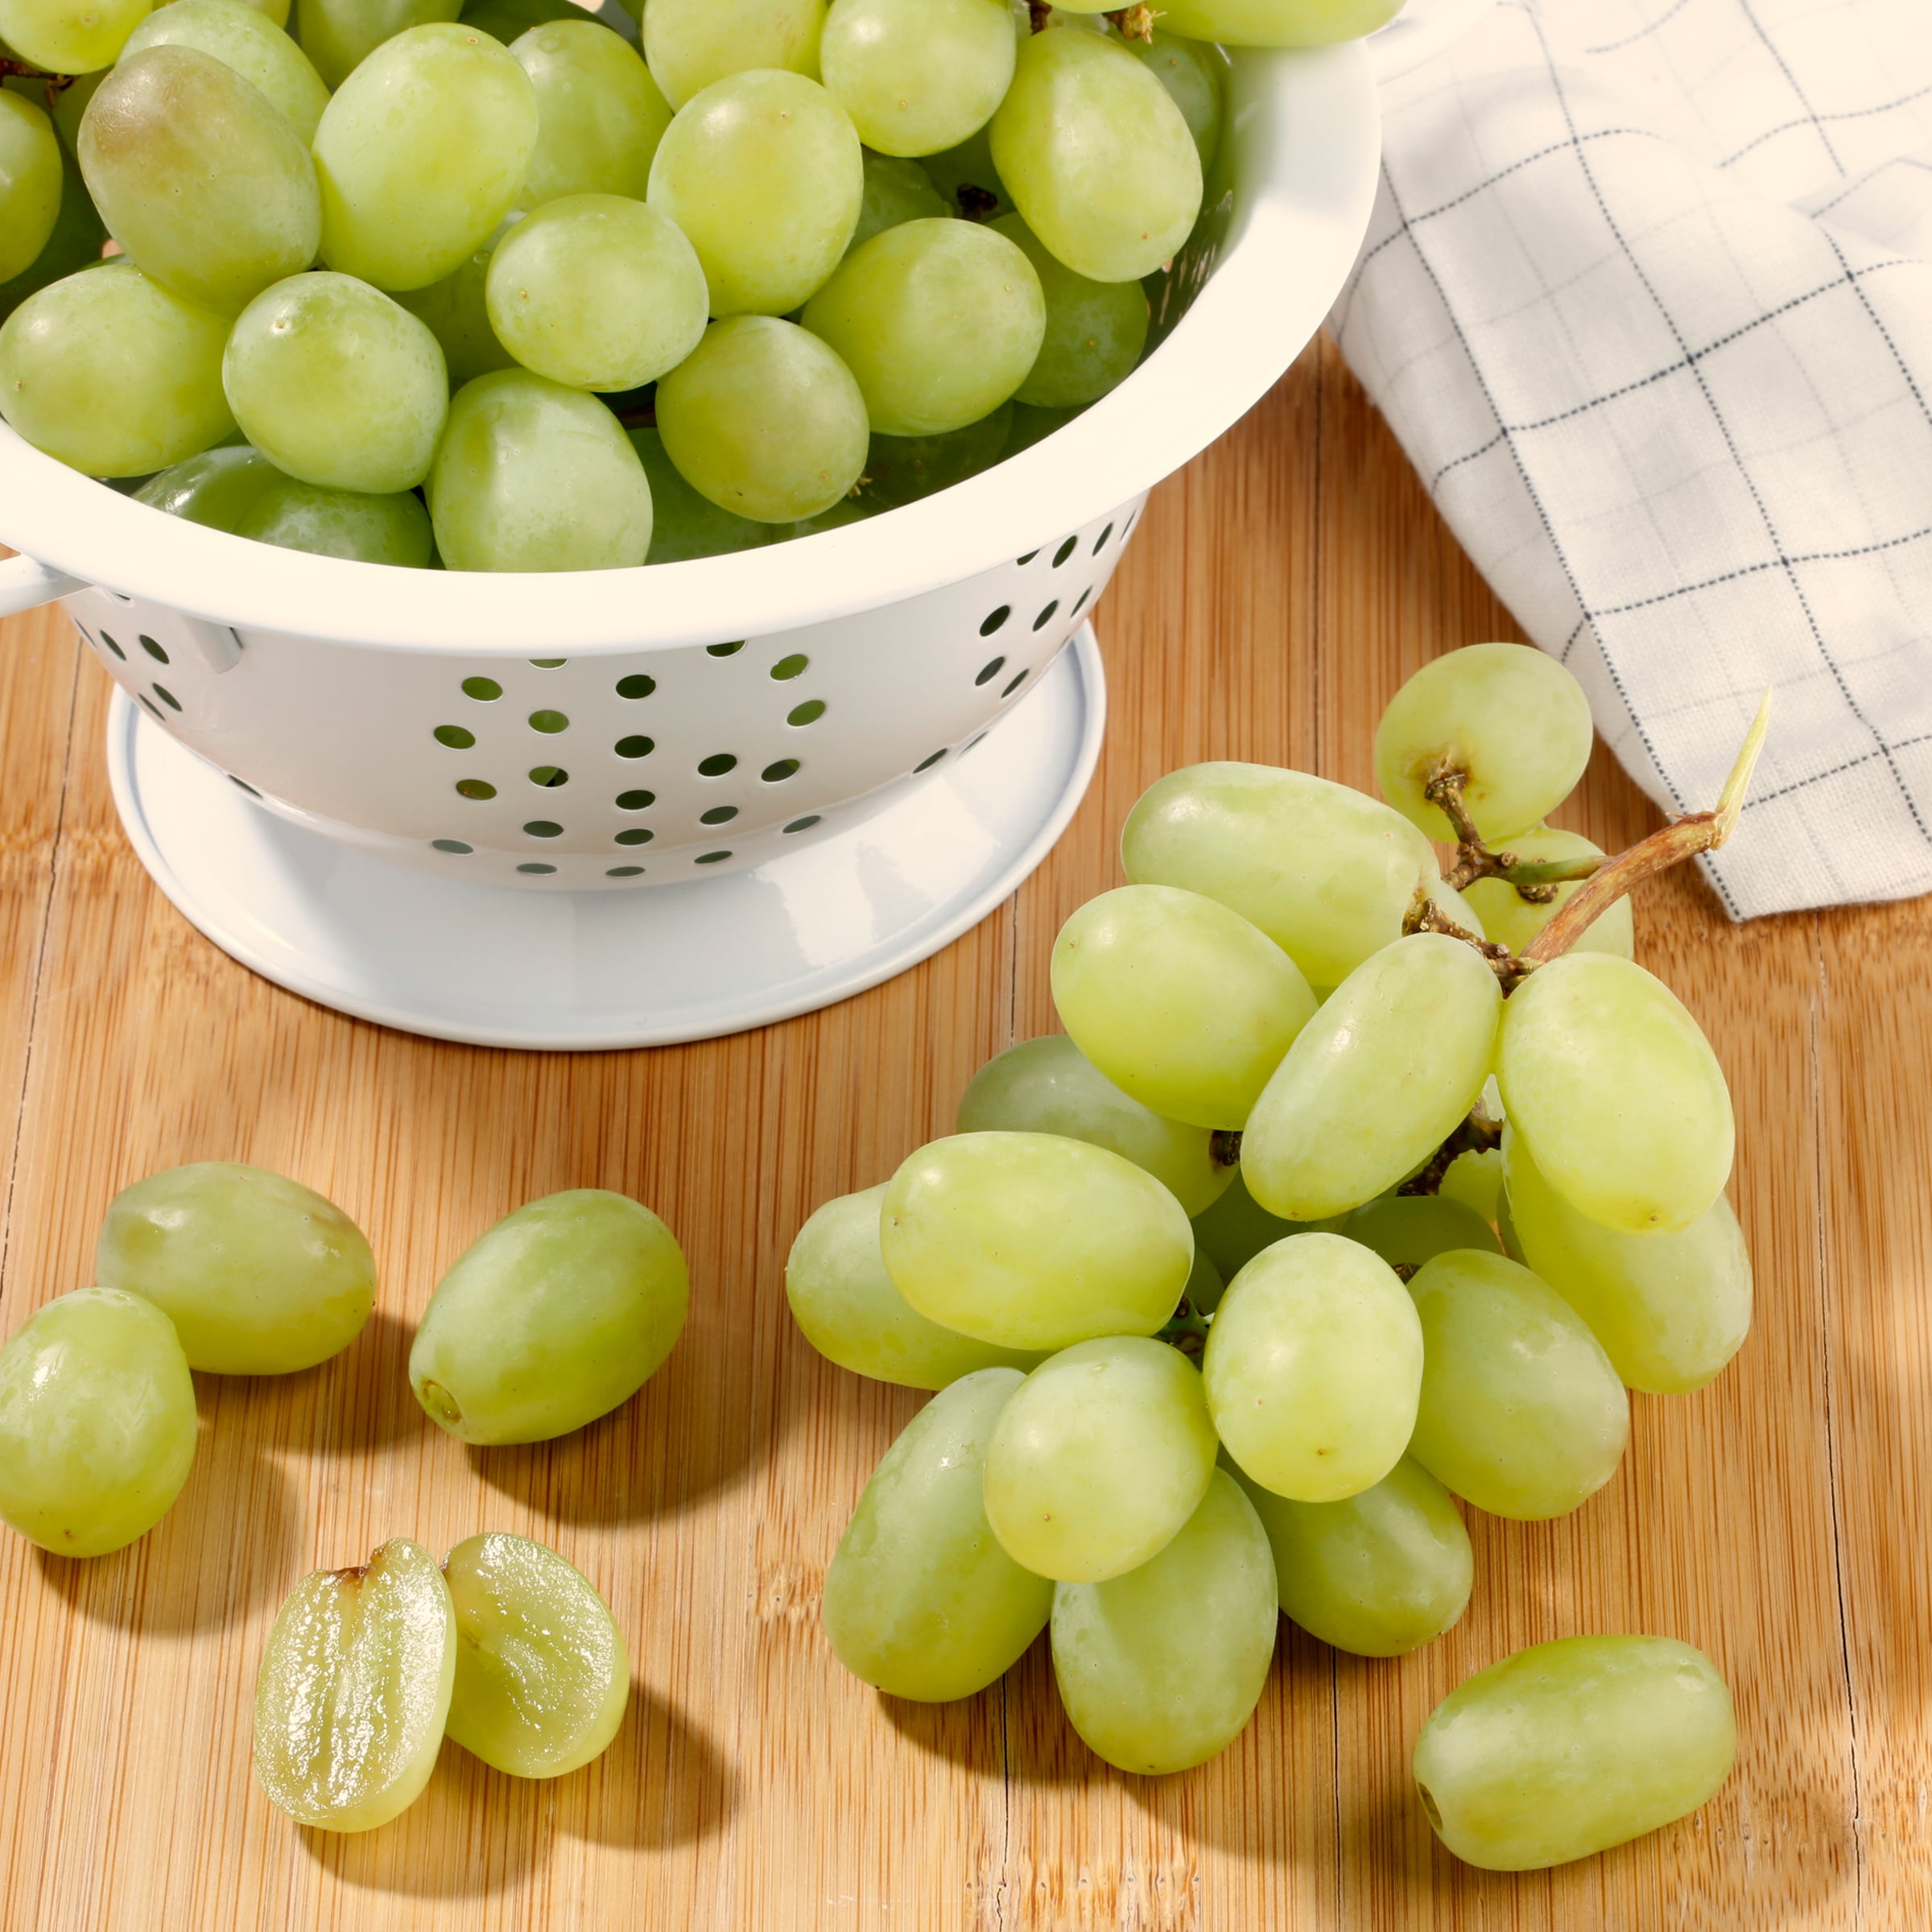 Grapes for Harvest Tote Bag by Vikki Bouffard - Pixels